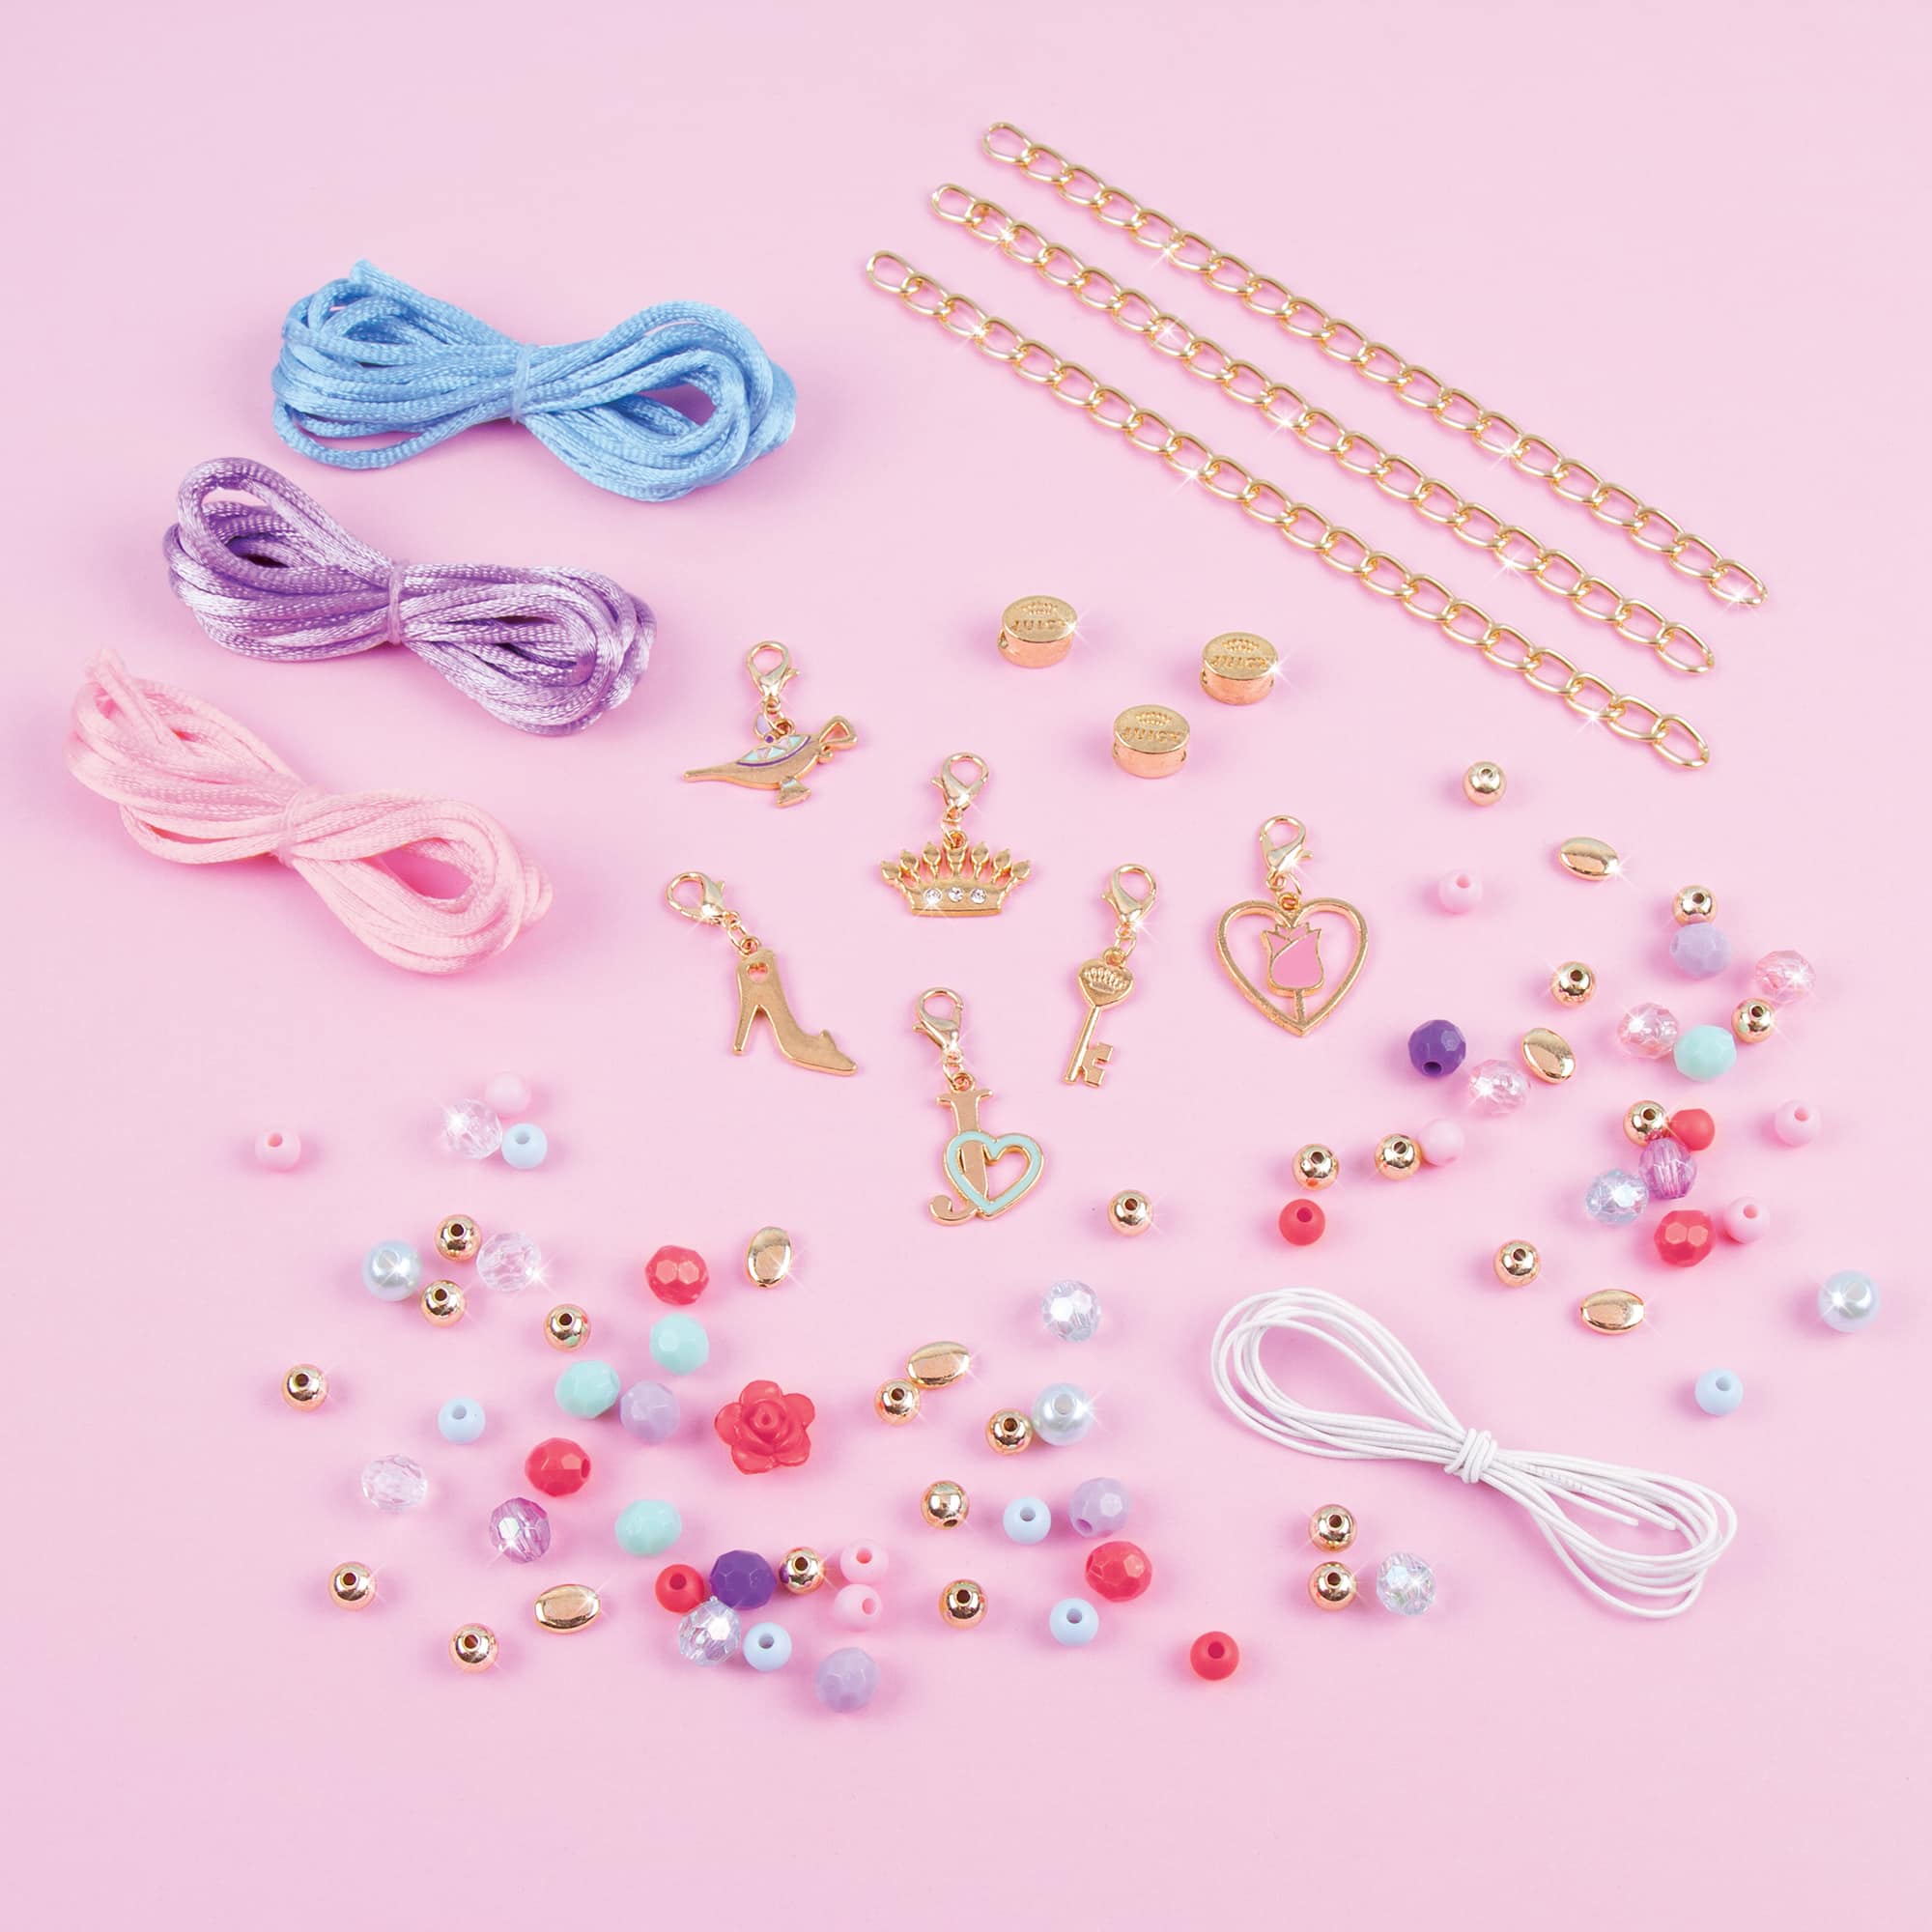 Make It Real Disney Princess x Juicy Couture Hearts of Fashion Bracelet Kit